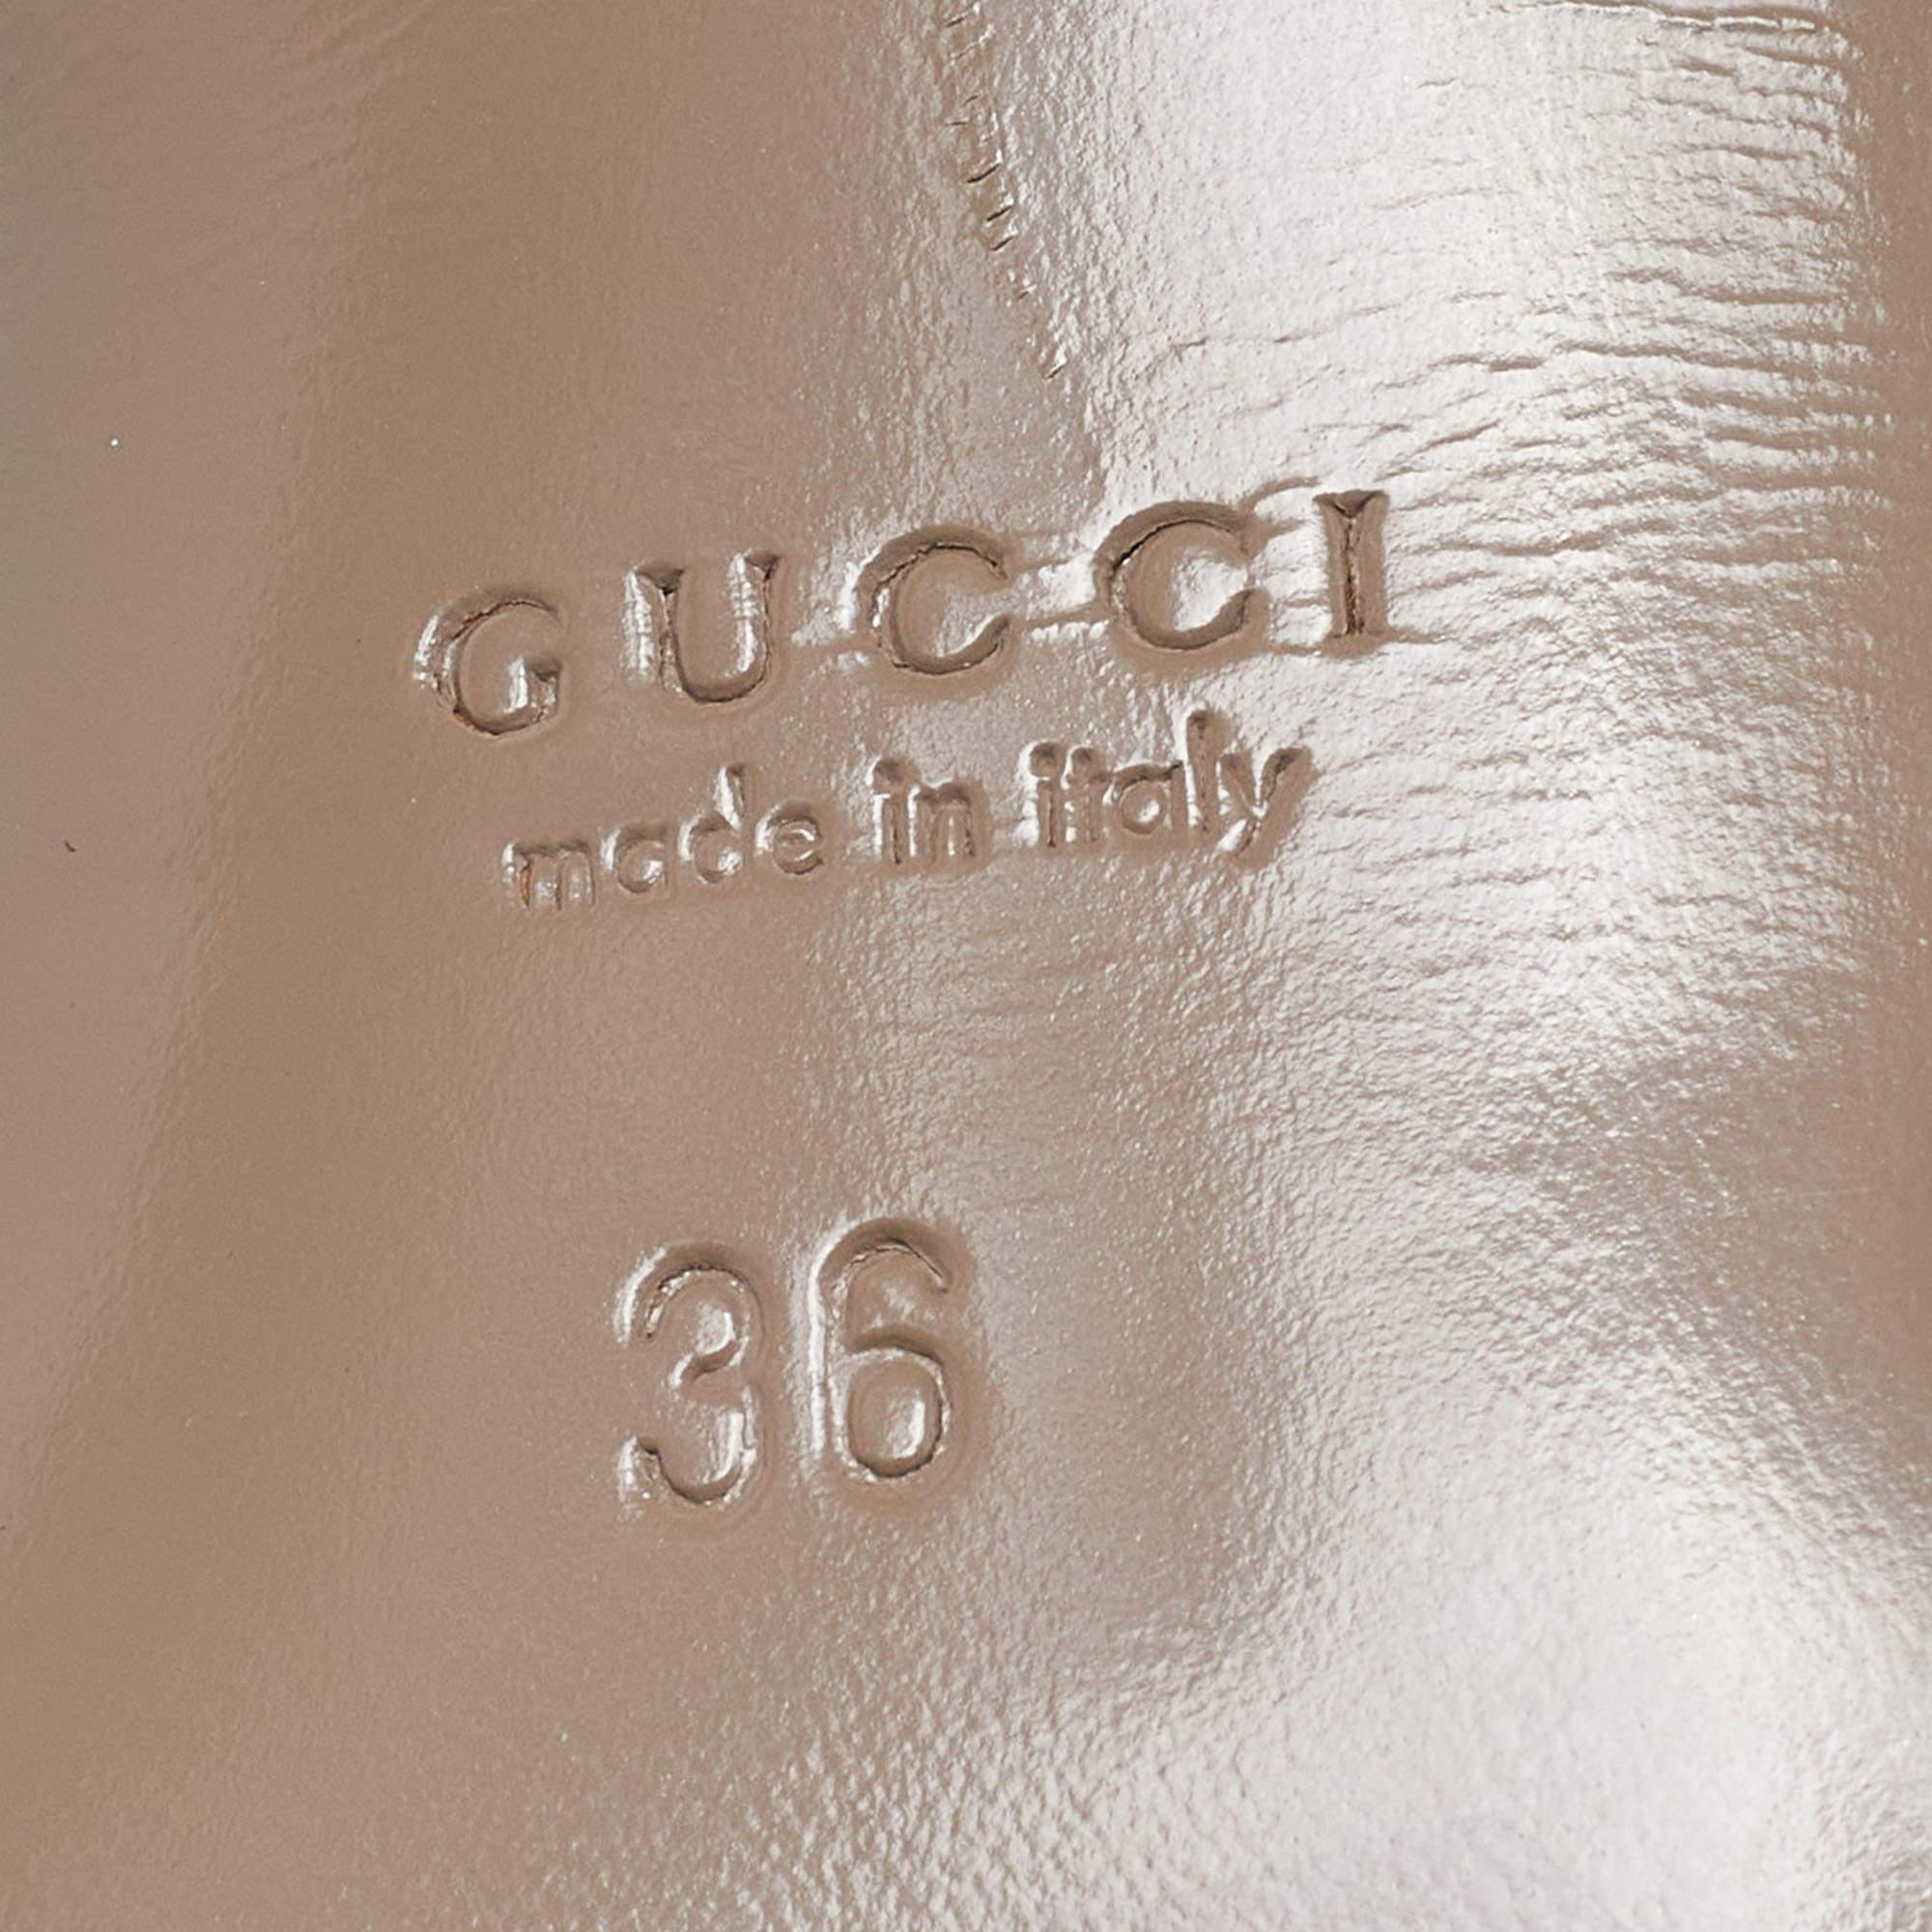 Gucci Cream Patent Leather Ursula Horsebit Gladiator Sandals Size 36 1